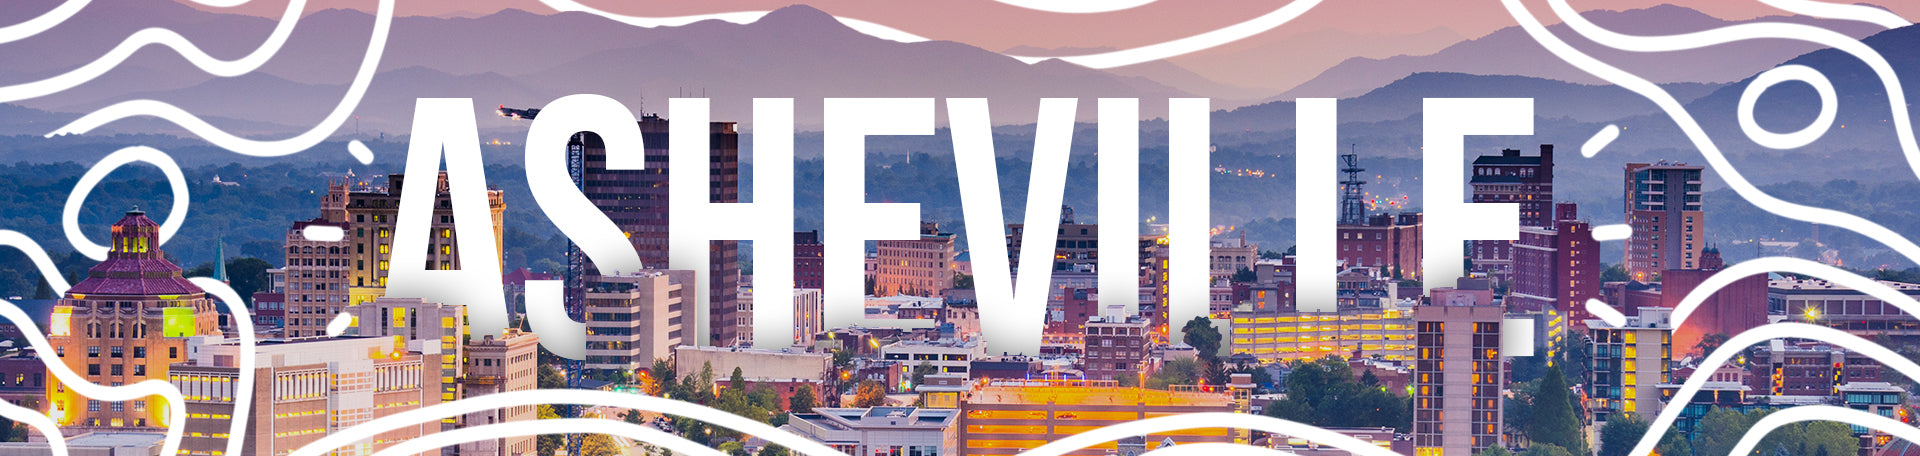 city of Asheville image on the best online marketplace website